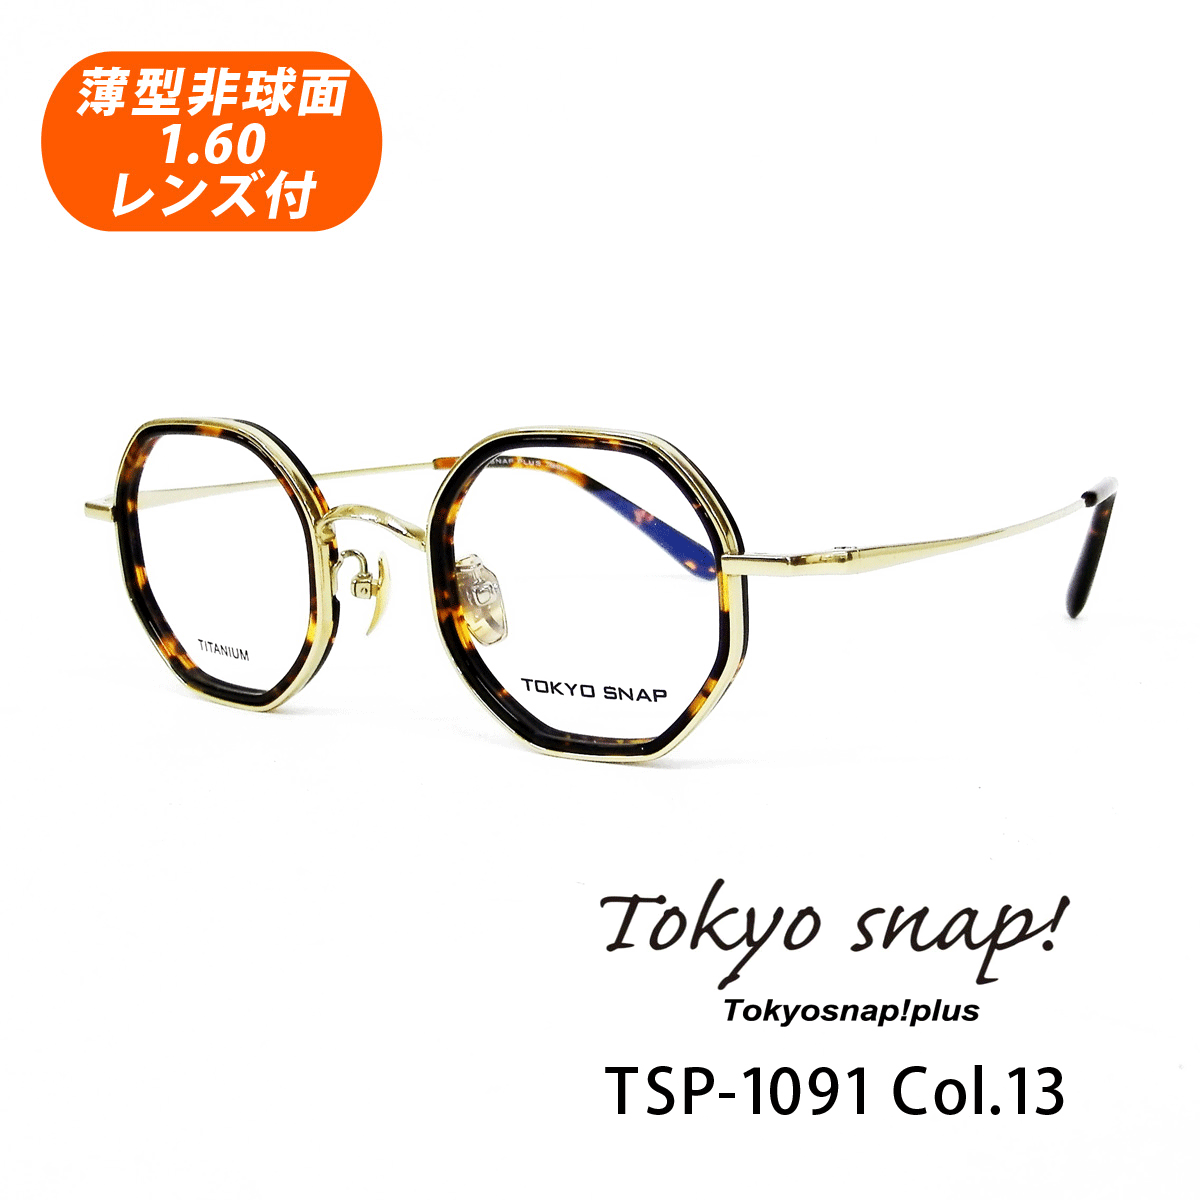 Tokyo snap plus トーキョースナップ プラス メガネフレーム